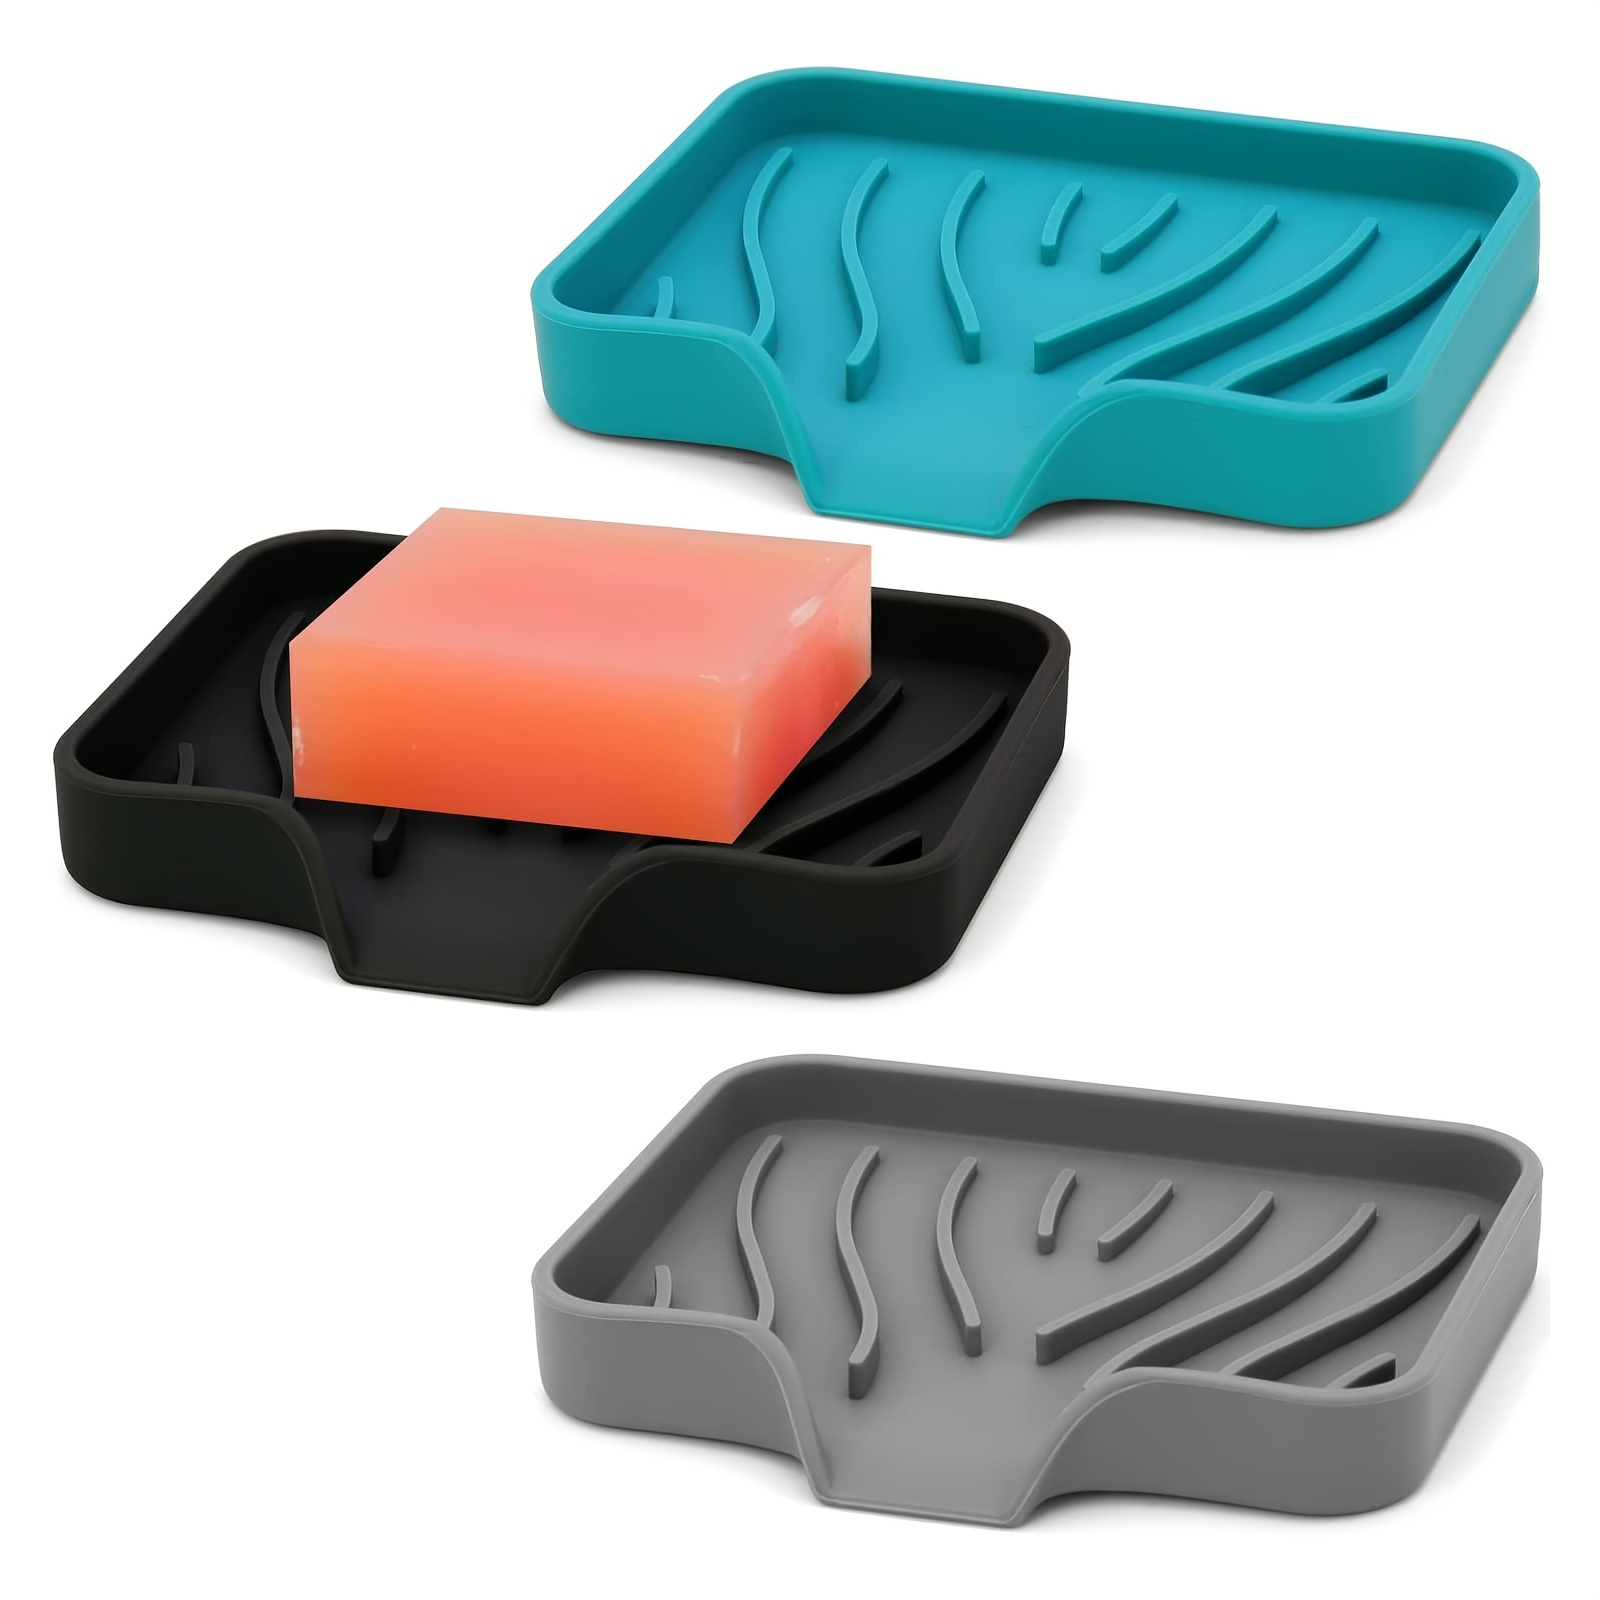 Silicone self draining soap dish, shower steamer tray, non-slip soap holder  tray